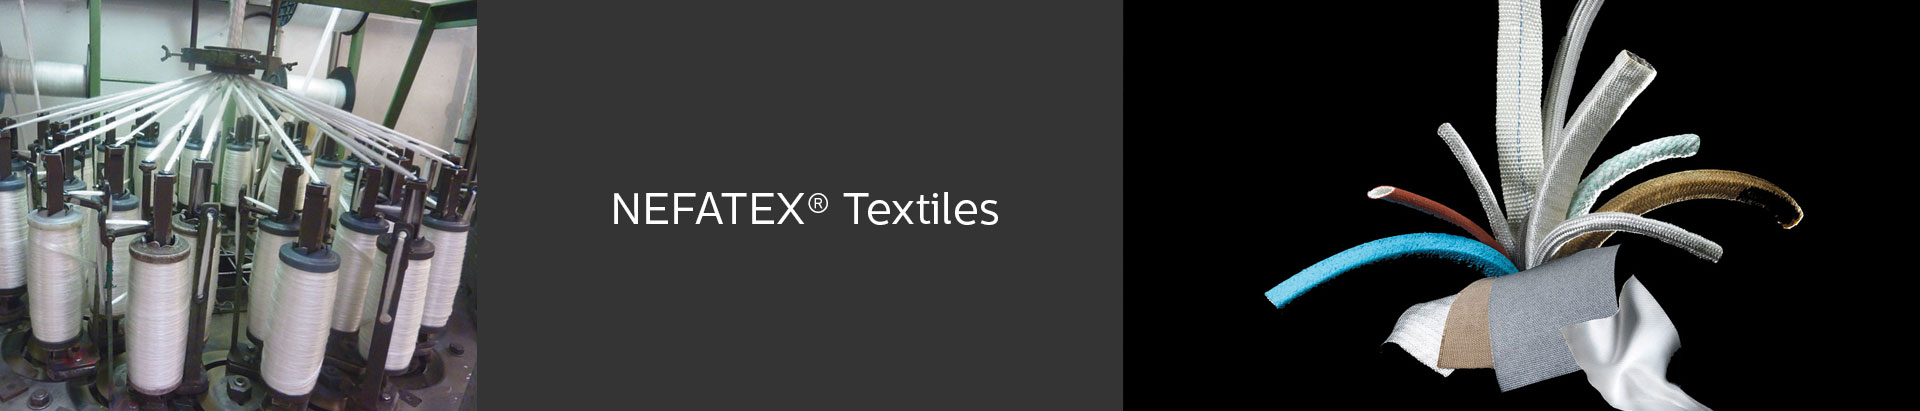 Textiles-NEFATEX-en